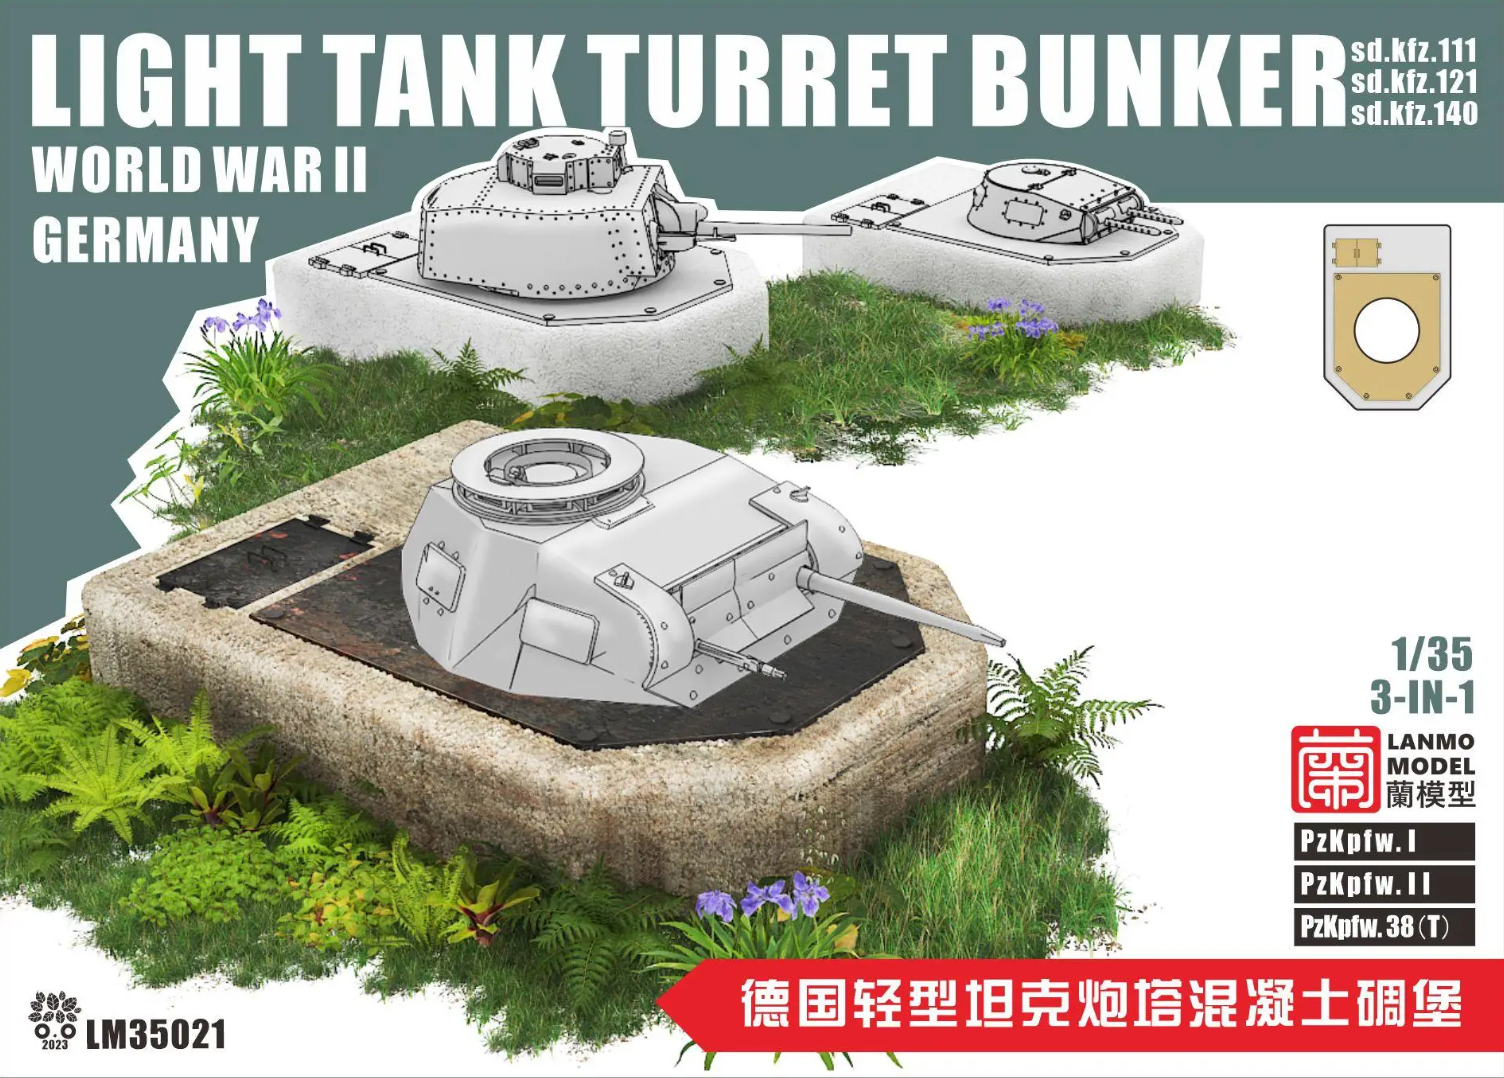 LM-35021  наборы для диорам  Light Tank Turret Bunker Sd.Kfz.111, Sd.Kfz.121, Sd.Kfz.140  (1:35)